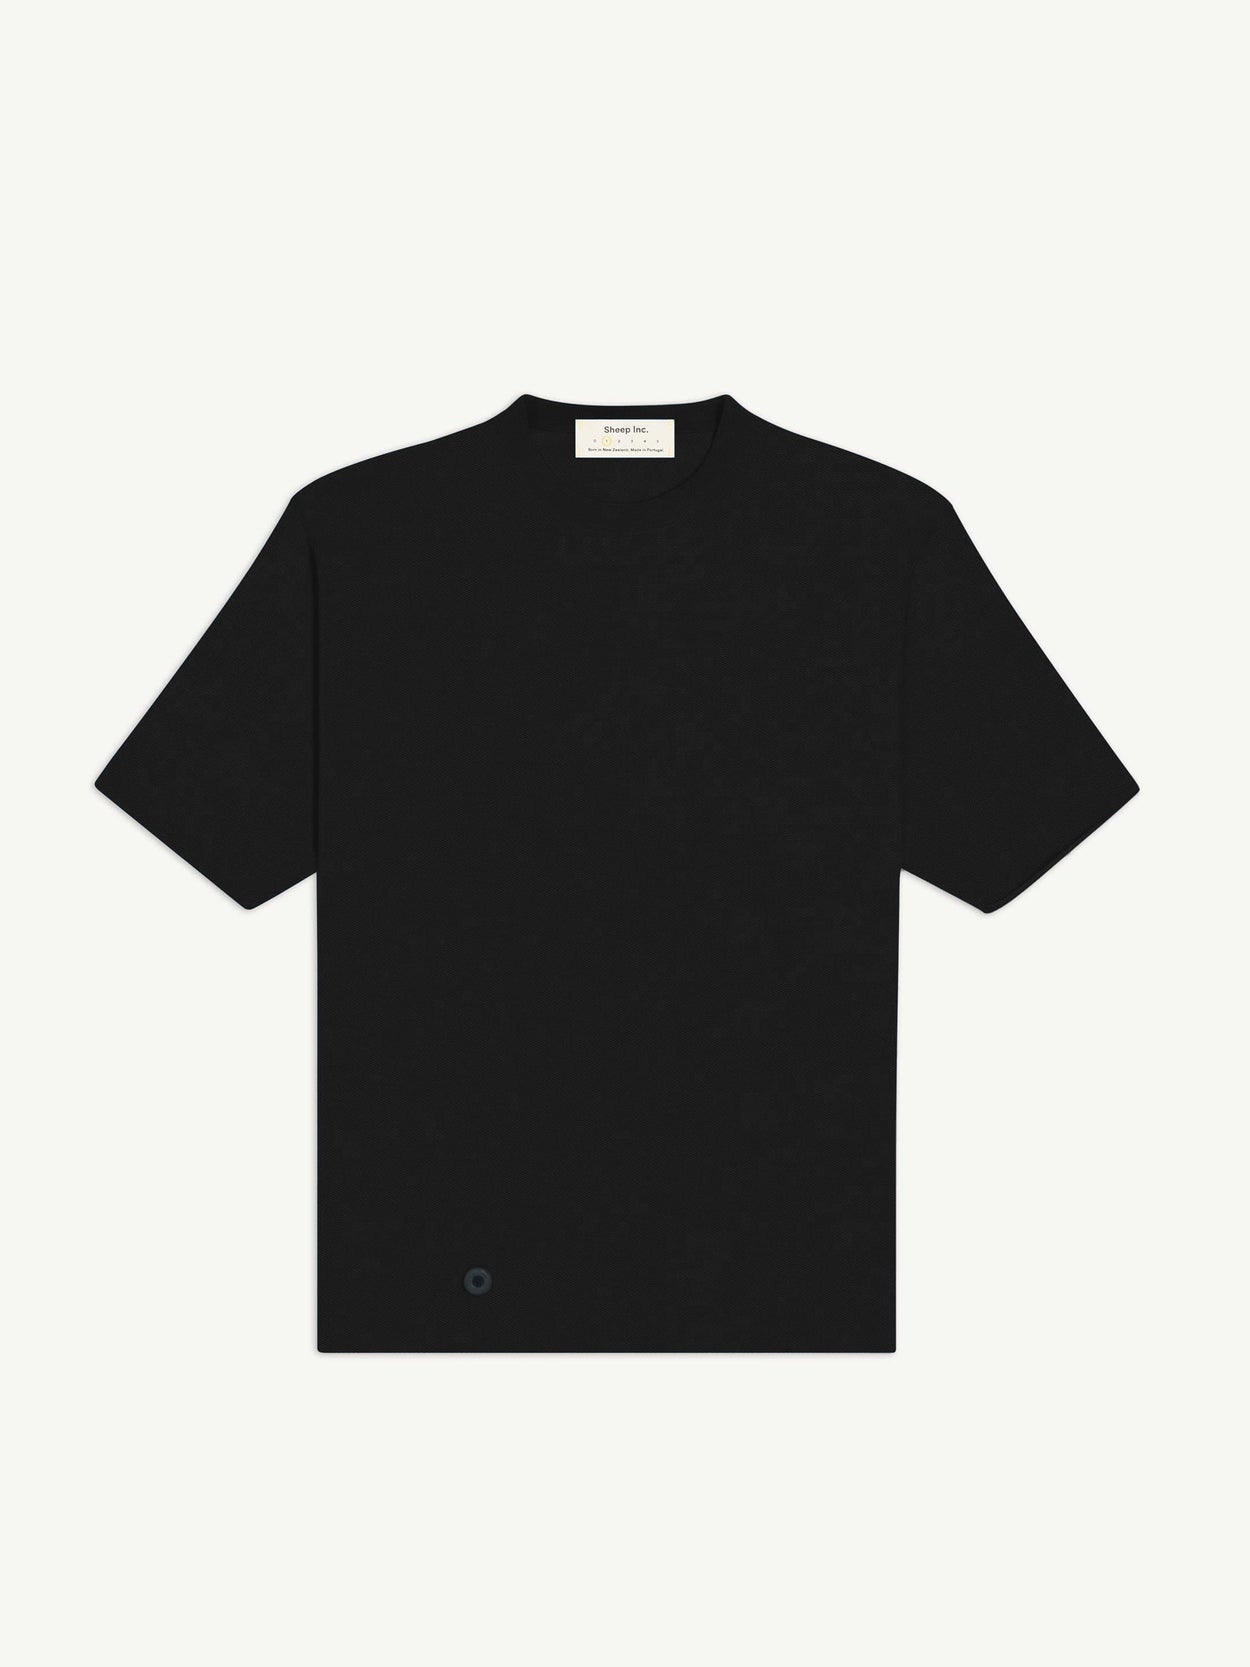 LOUIS VUITTON Black T-Shirt Top PRINT Iconic Chain Short Sleeve Crew Neck  Sz S